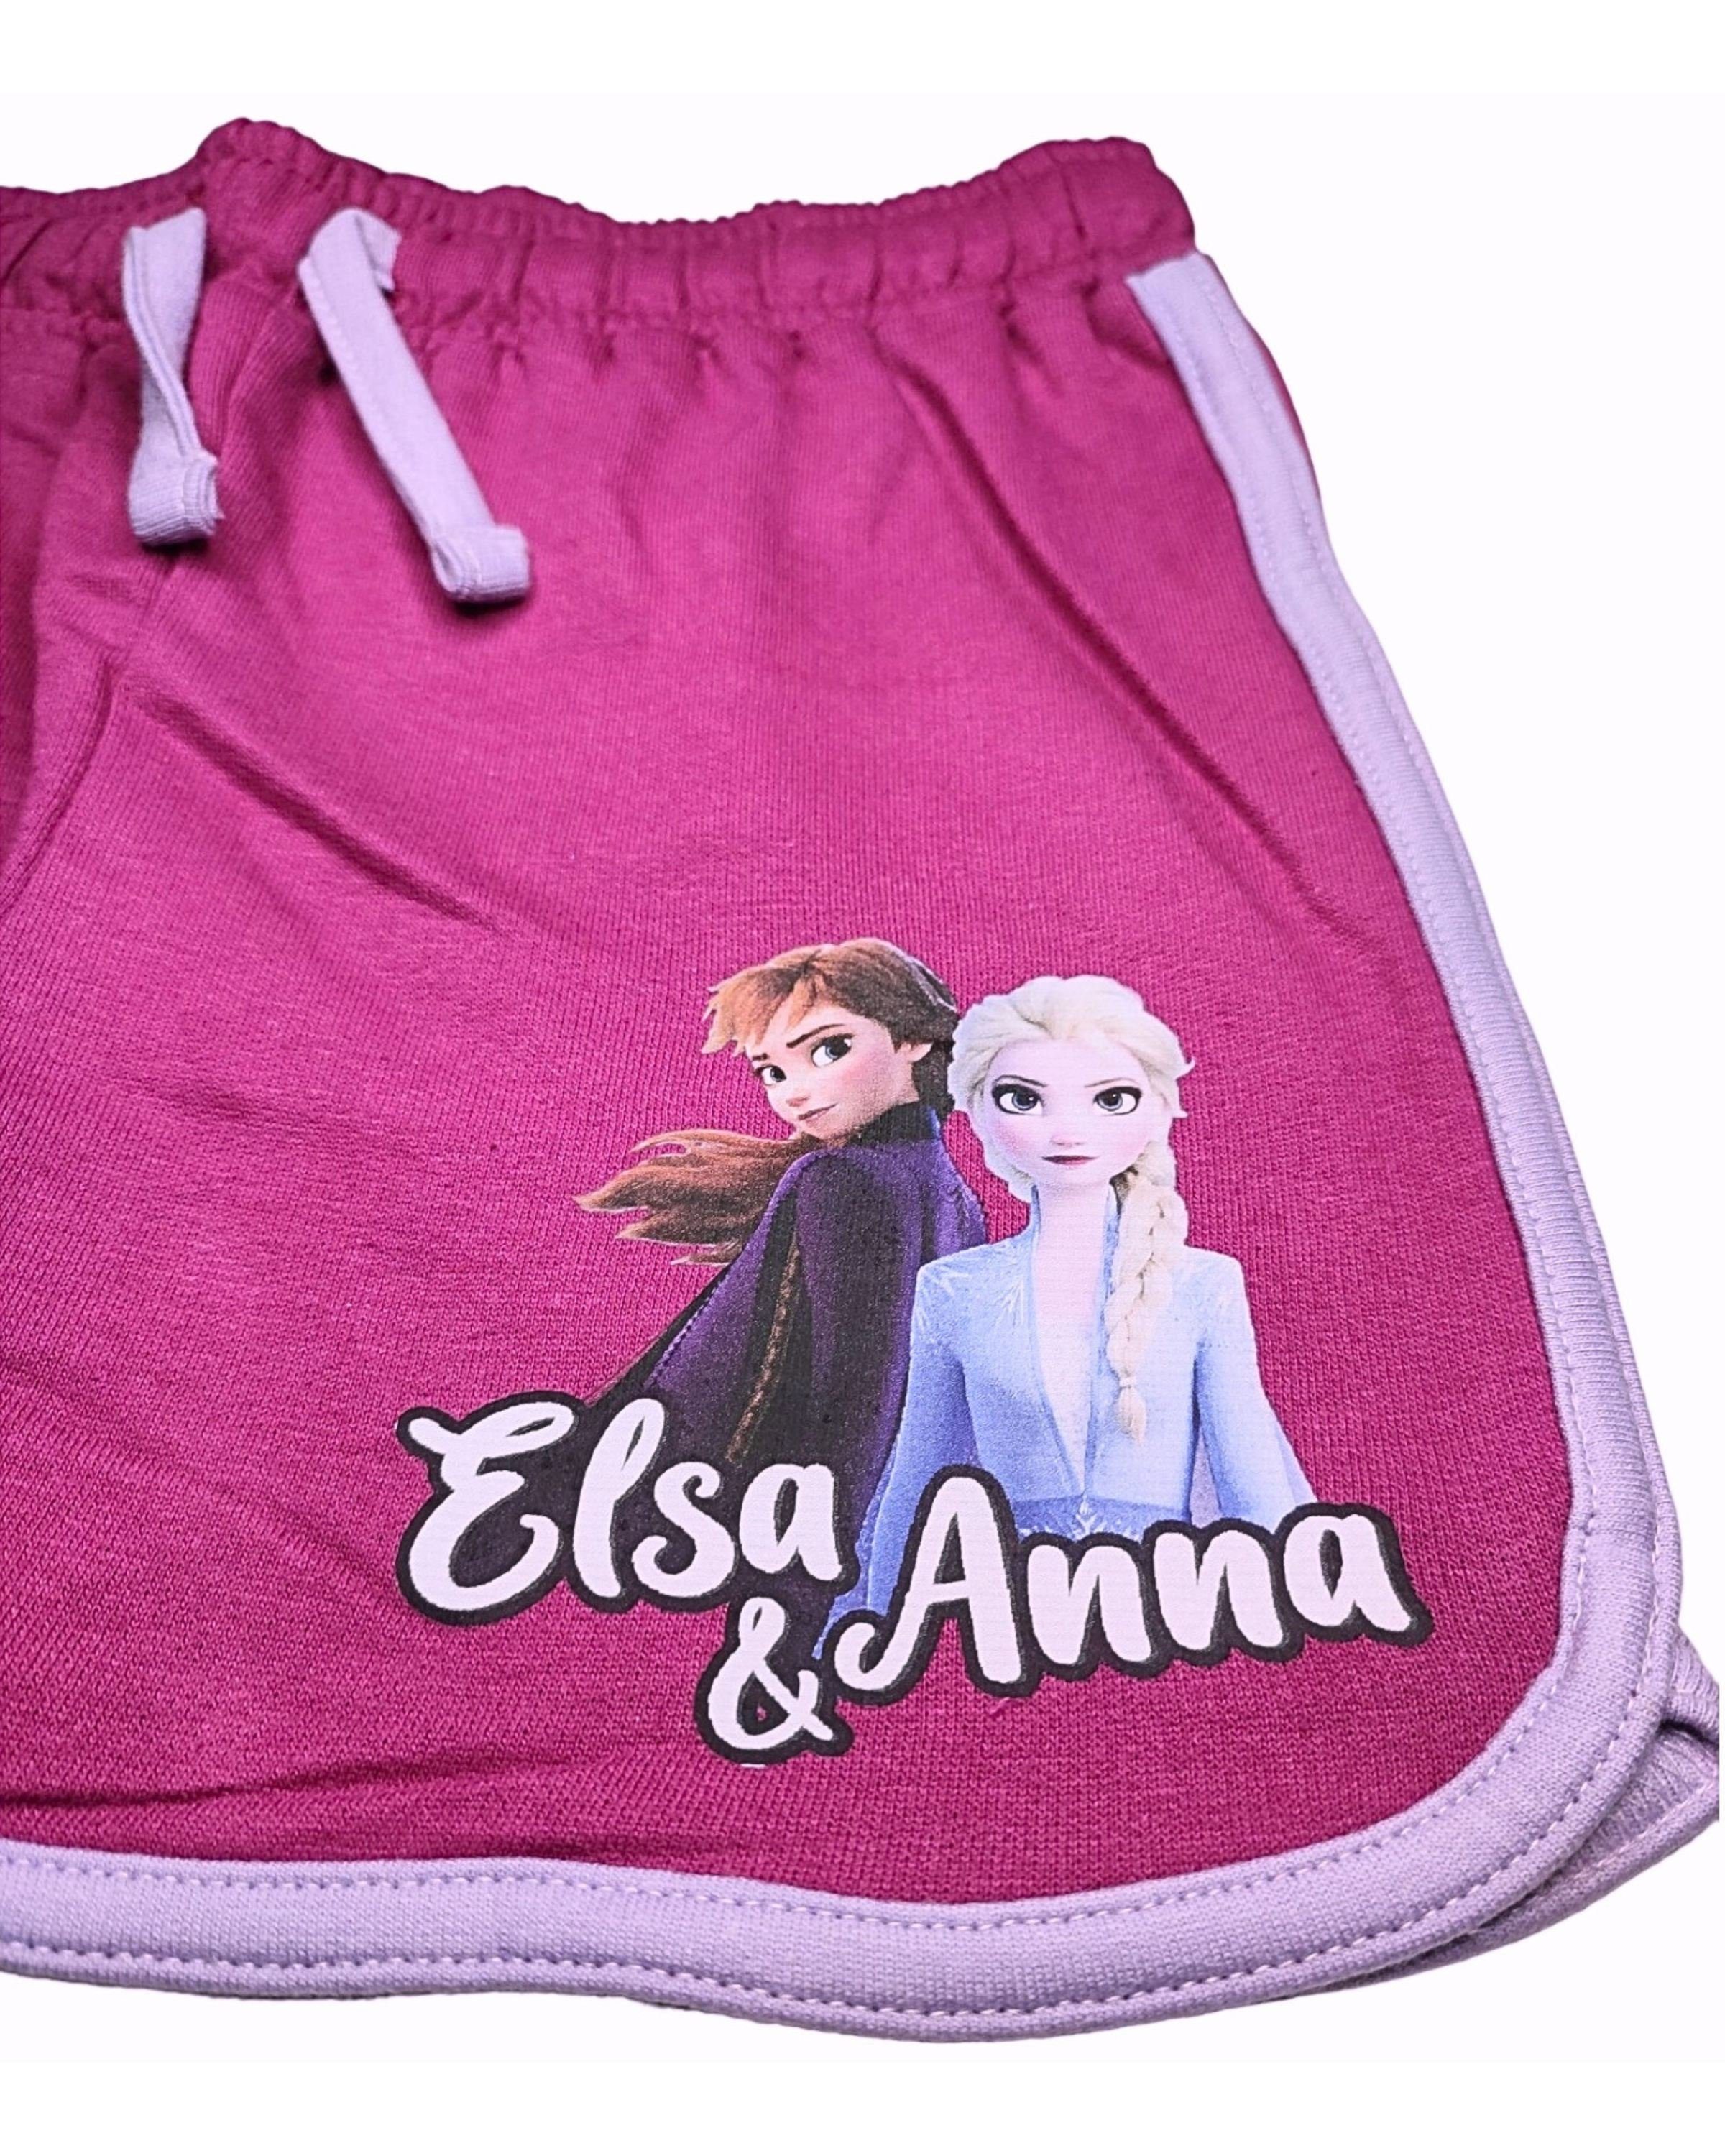 Hose Frozen cm Mädchen Shorts 128 Baumwolle kurze Disney Elsa & - Dunkellila aus 98 Anna Gr.